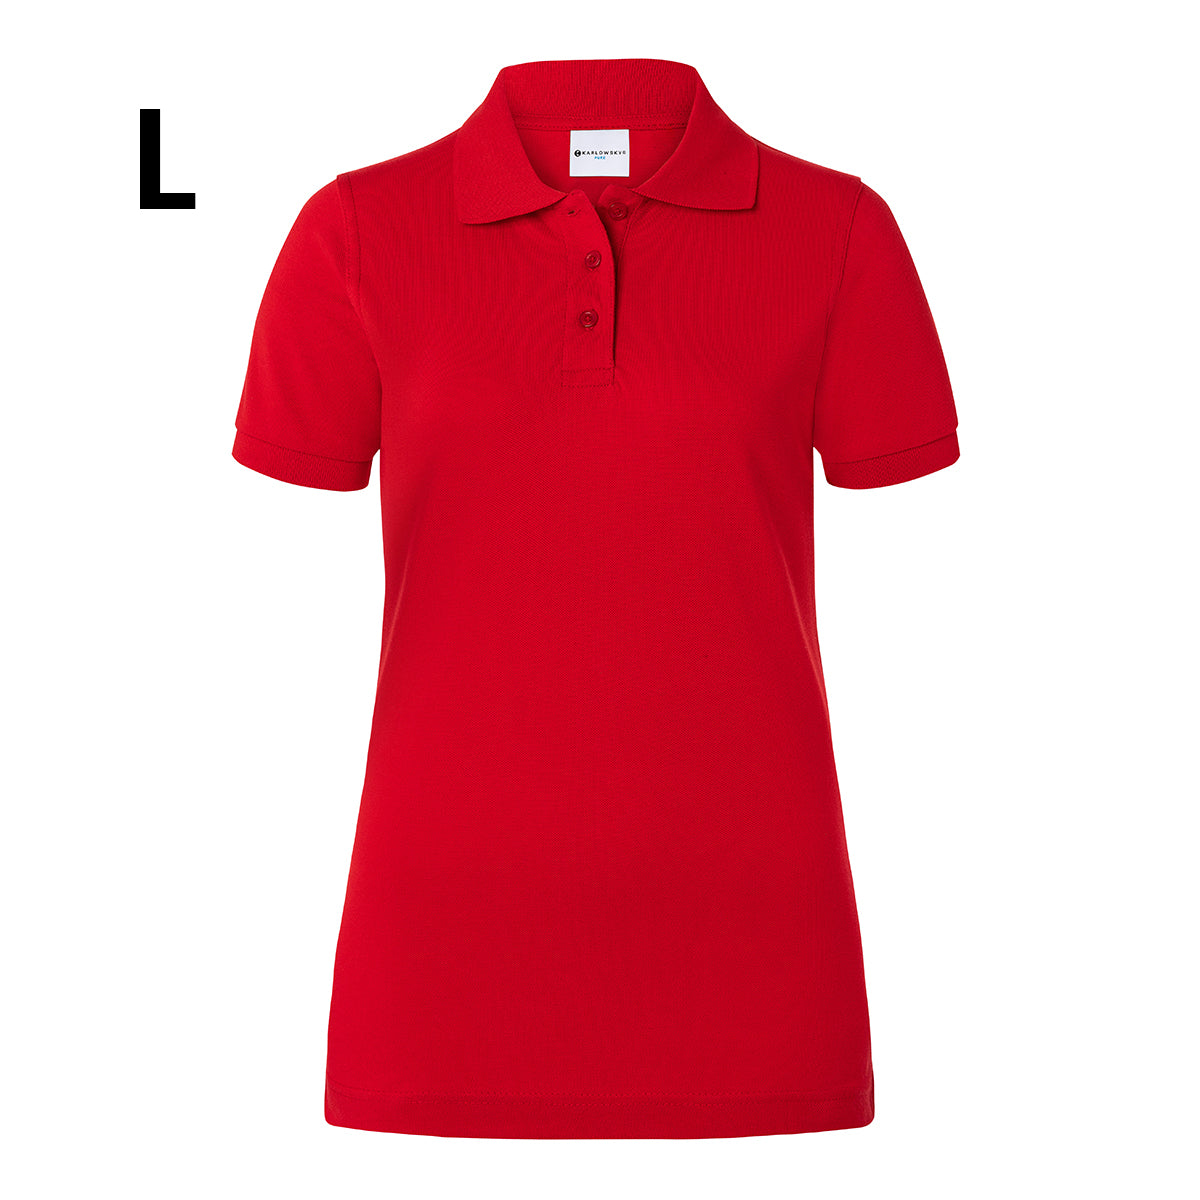 Karlowsky - Arbejdsbeklædning Basic Poloshirt til damer - Rød - Størrelse: L